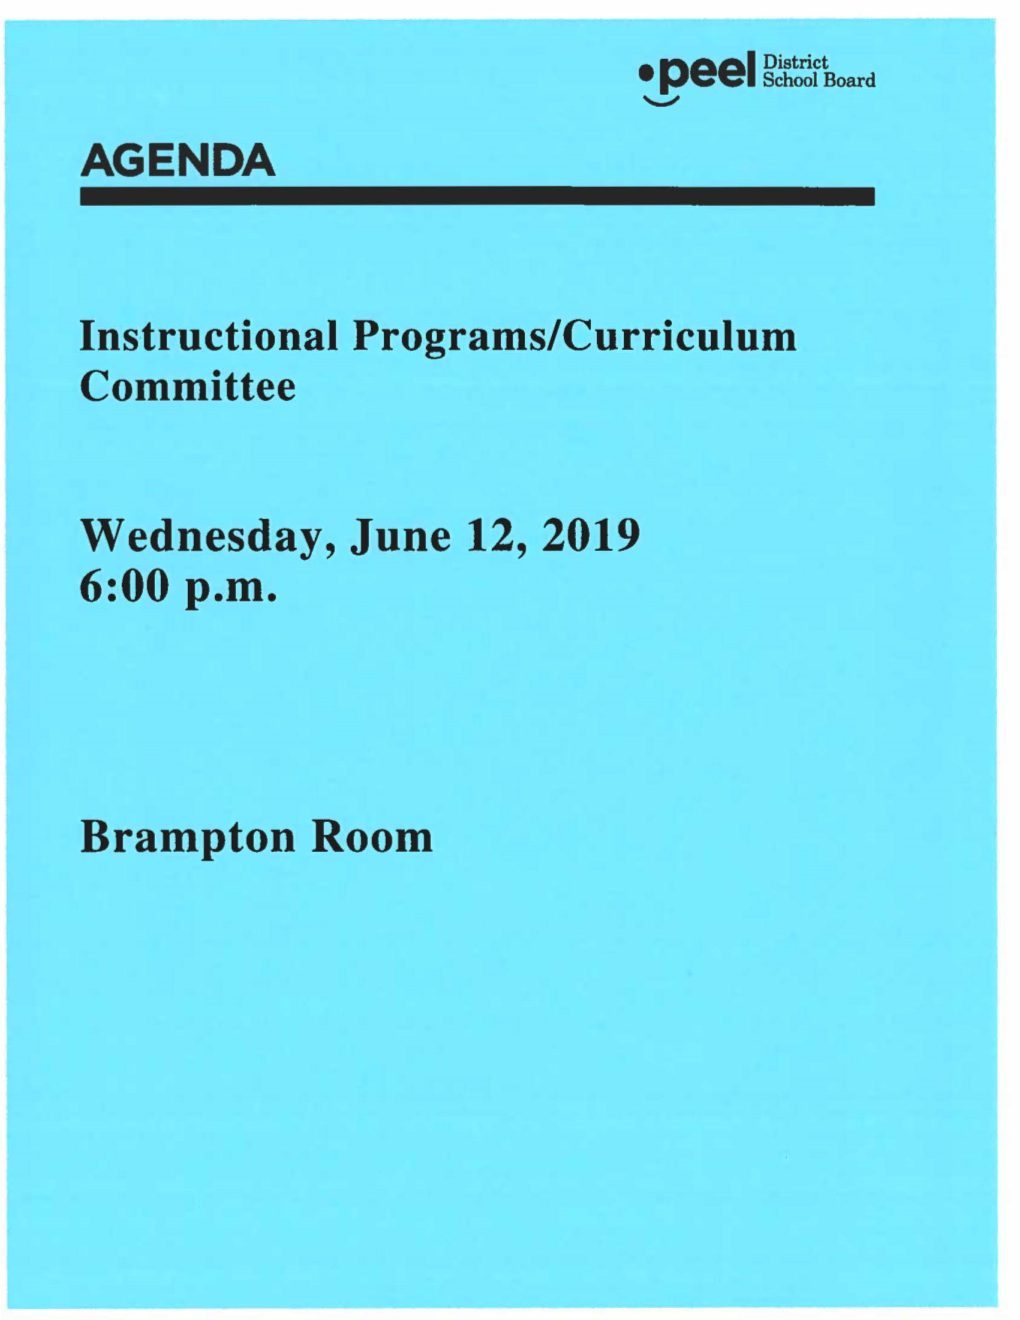 Wednesday, June 12, 2019 6:00P.M. Brampton Room